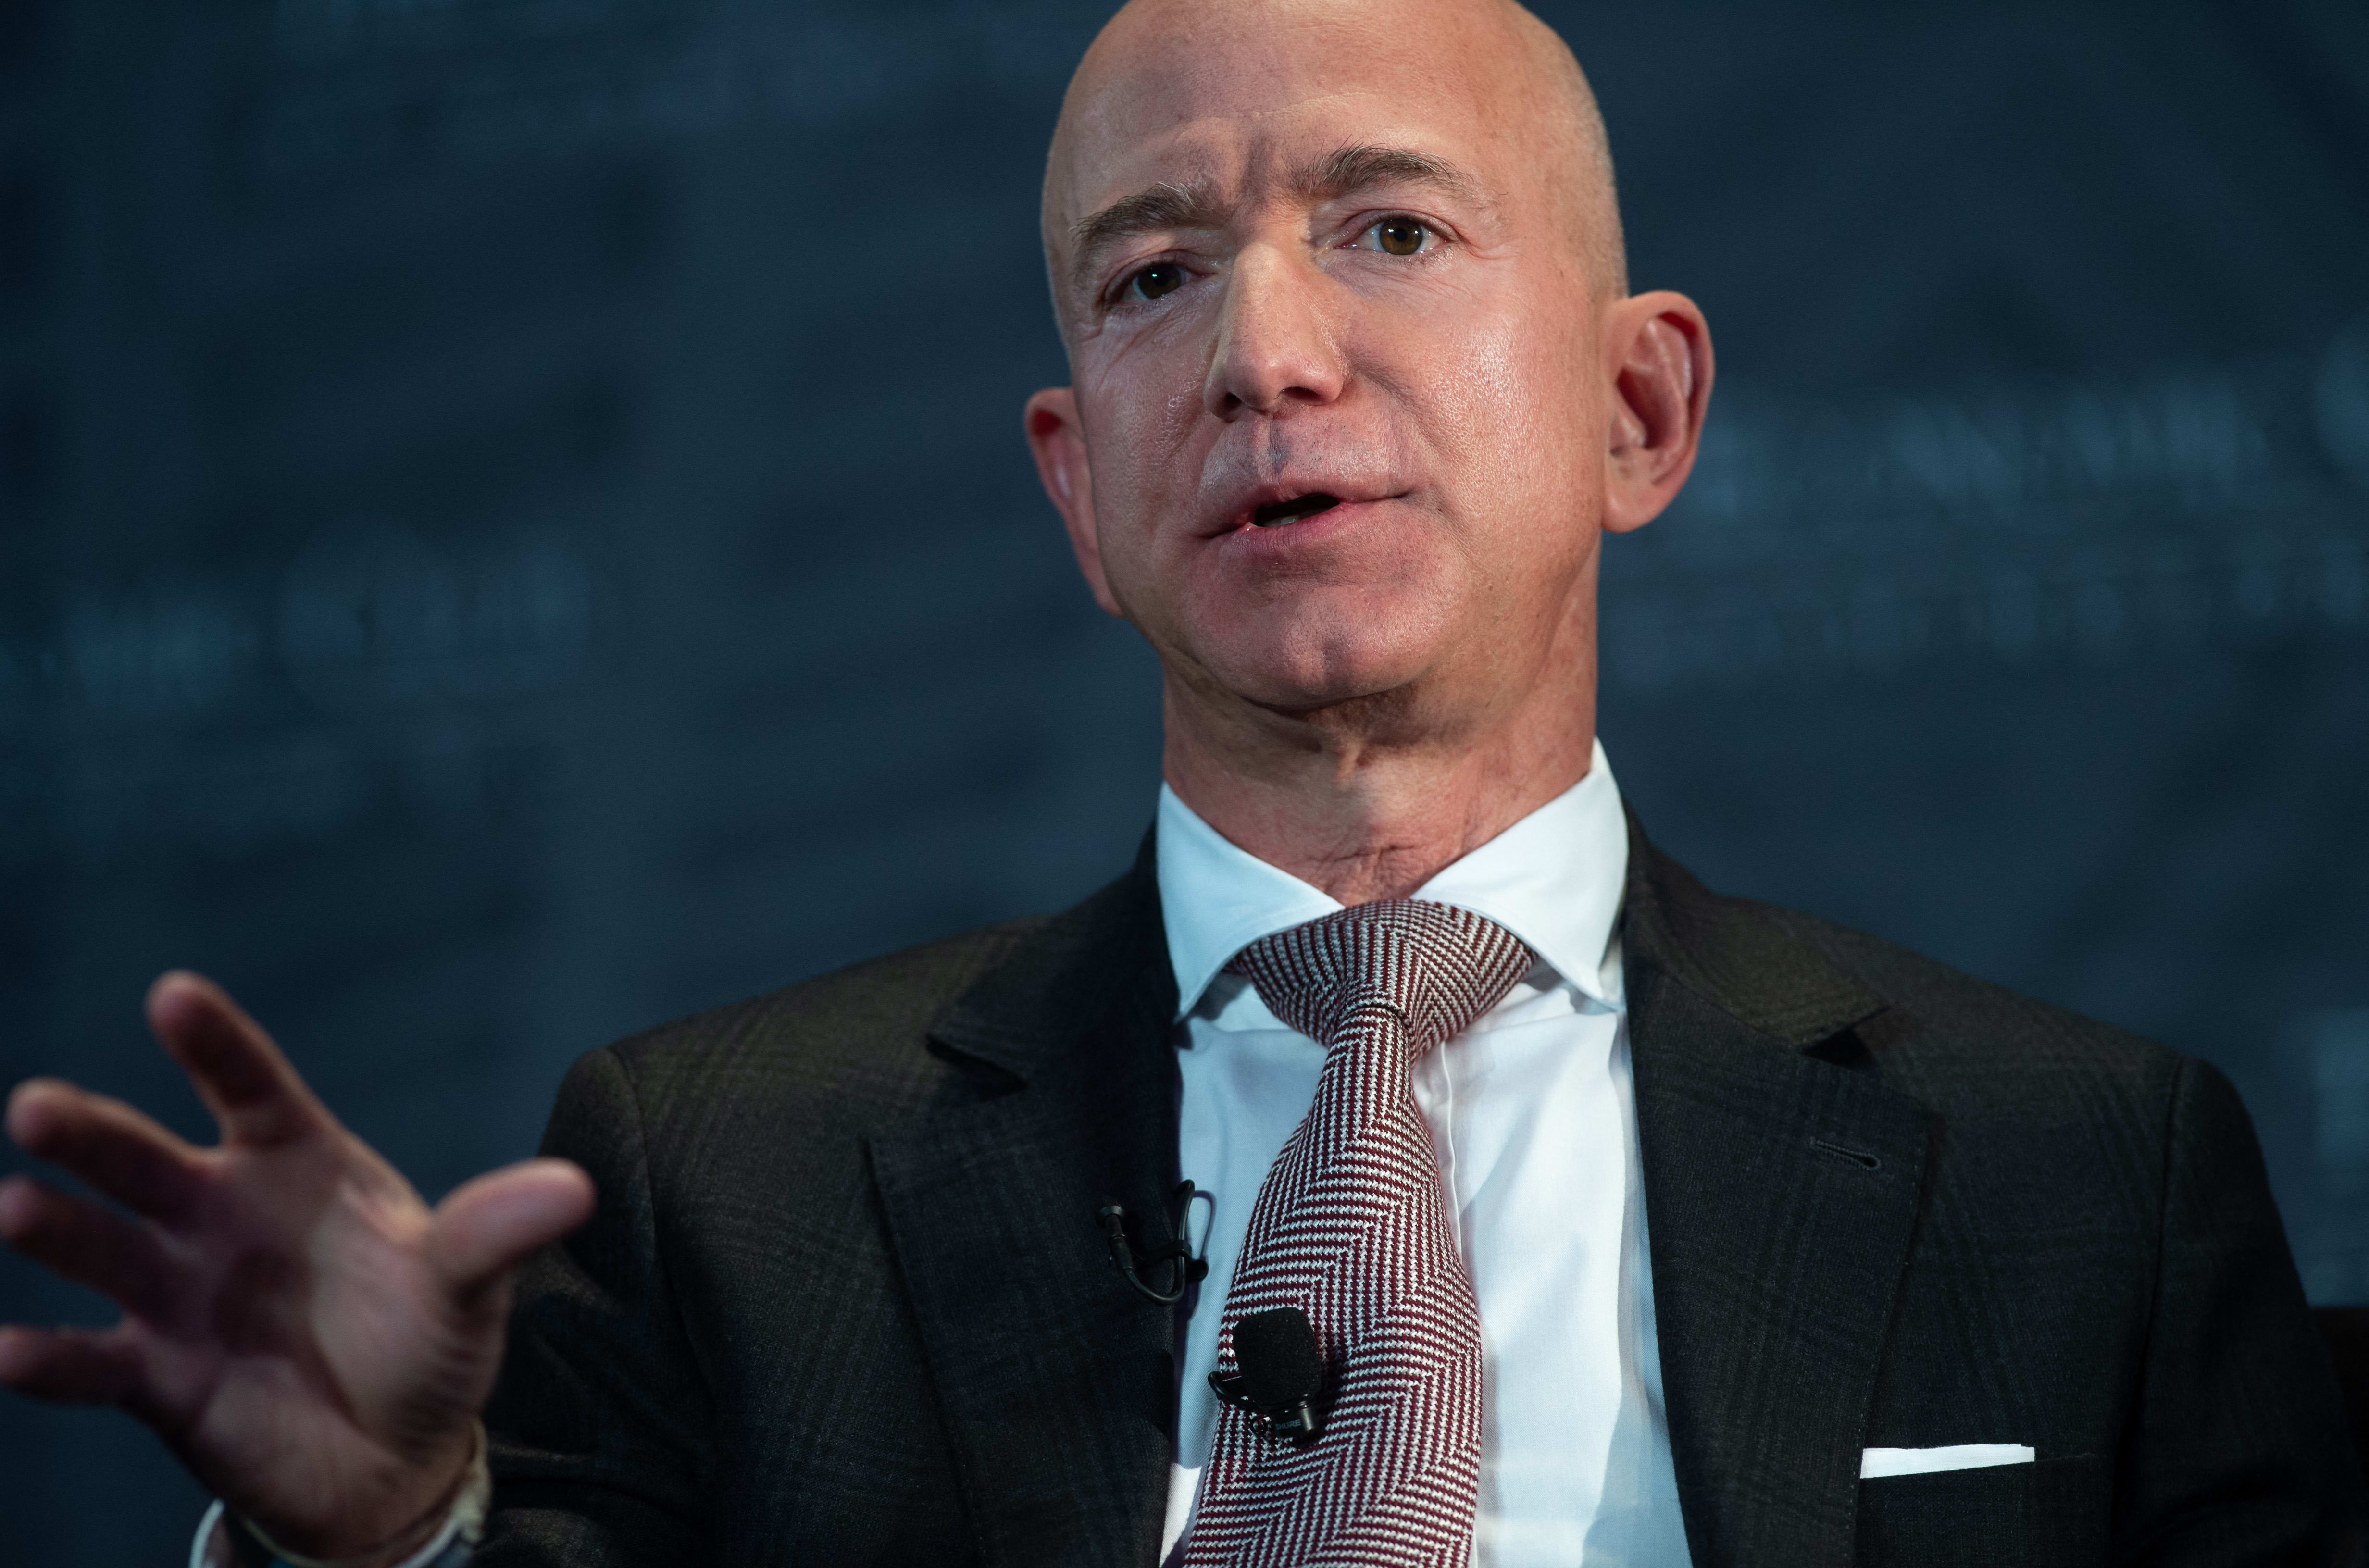 Jeff Bezos pictured in September 2018 speaking during the Economic Club of Washington's Milestone Celebration event in Washington, DC.